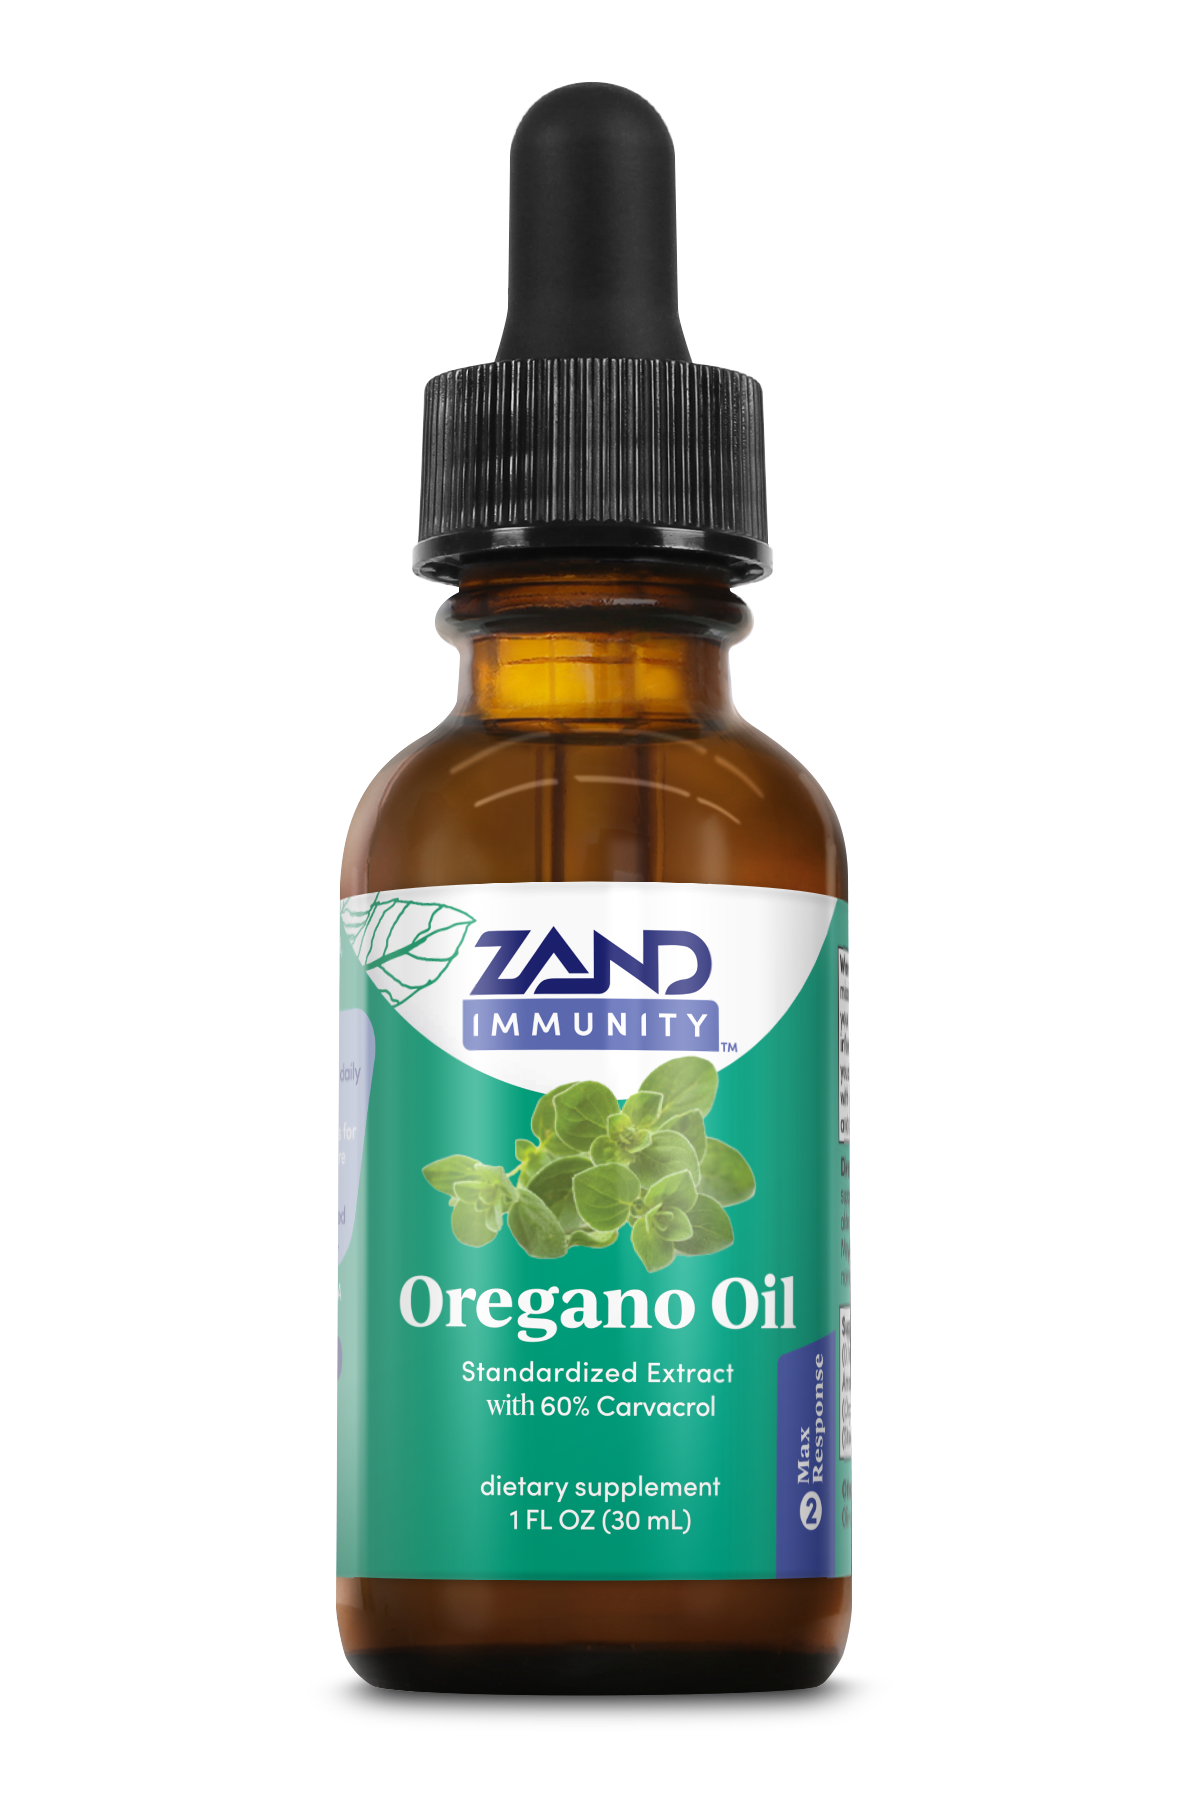 ZAND Oregano Oils Standardized Extract.